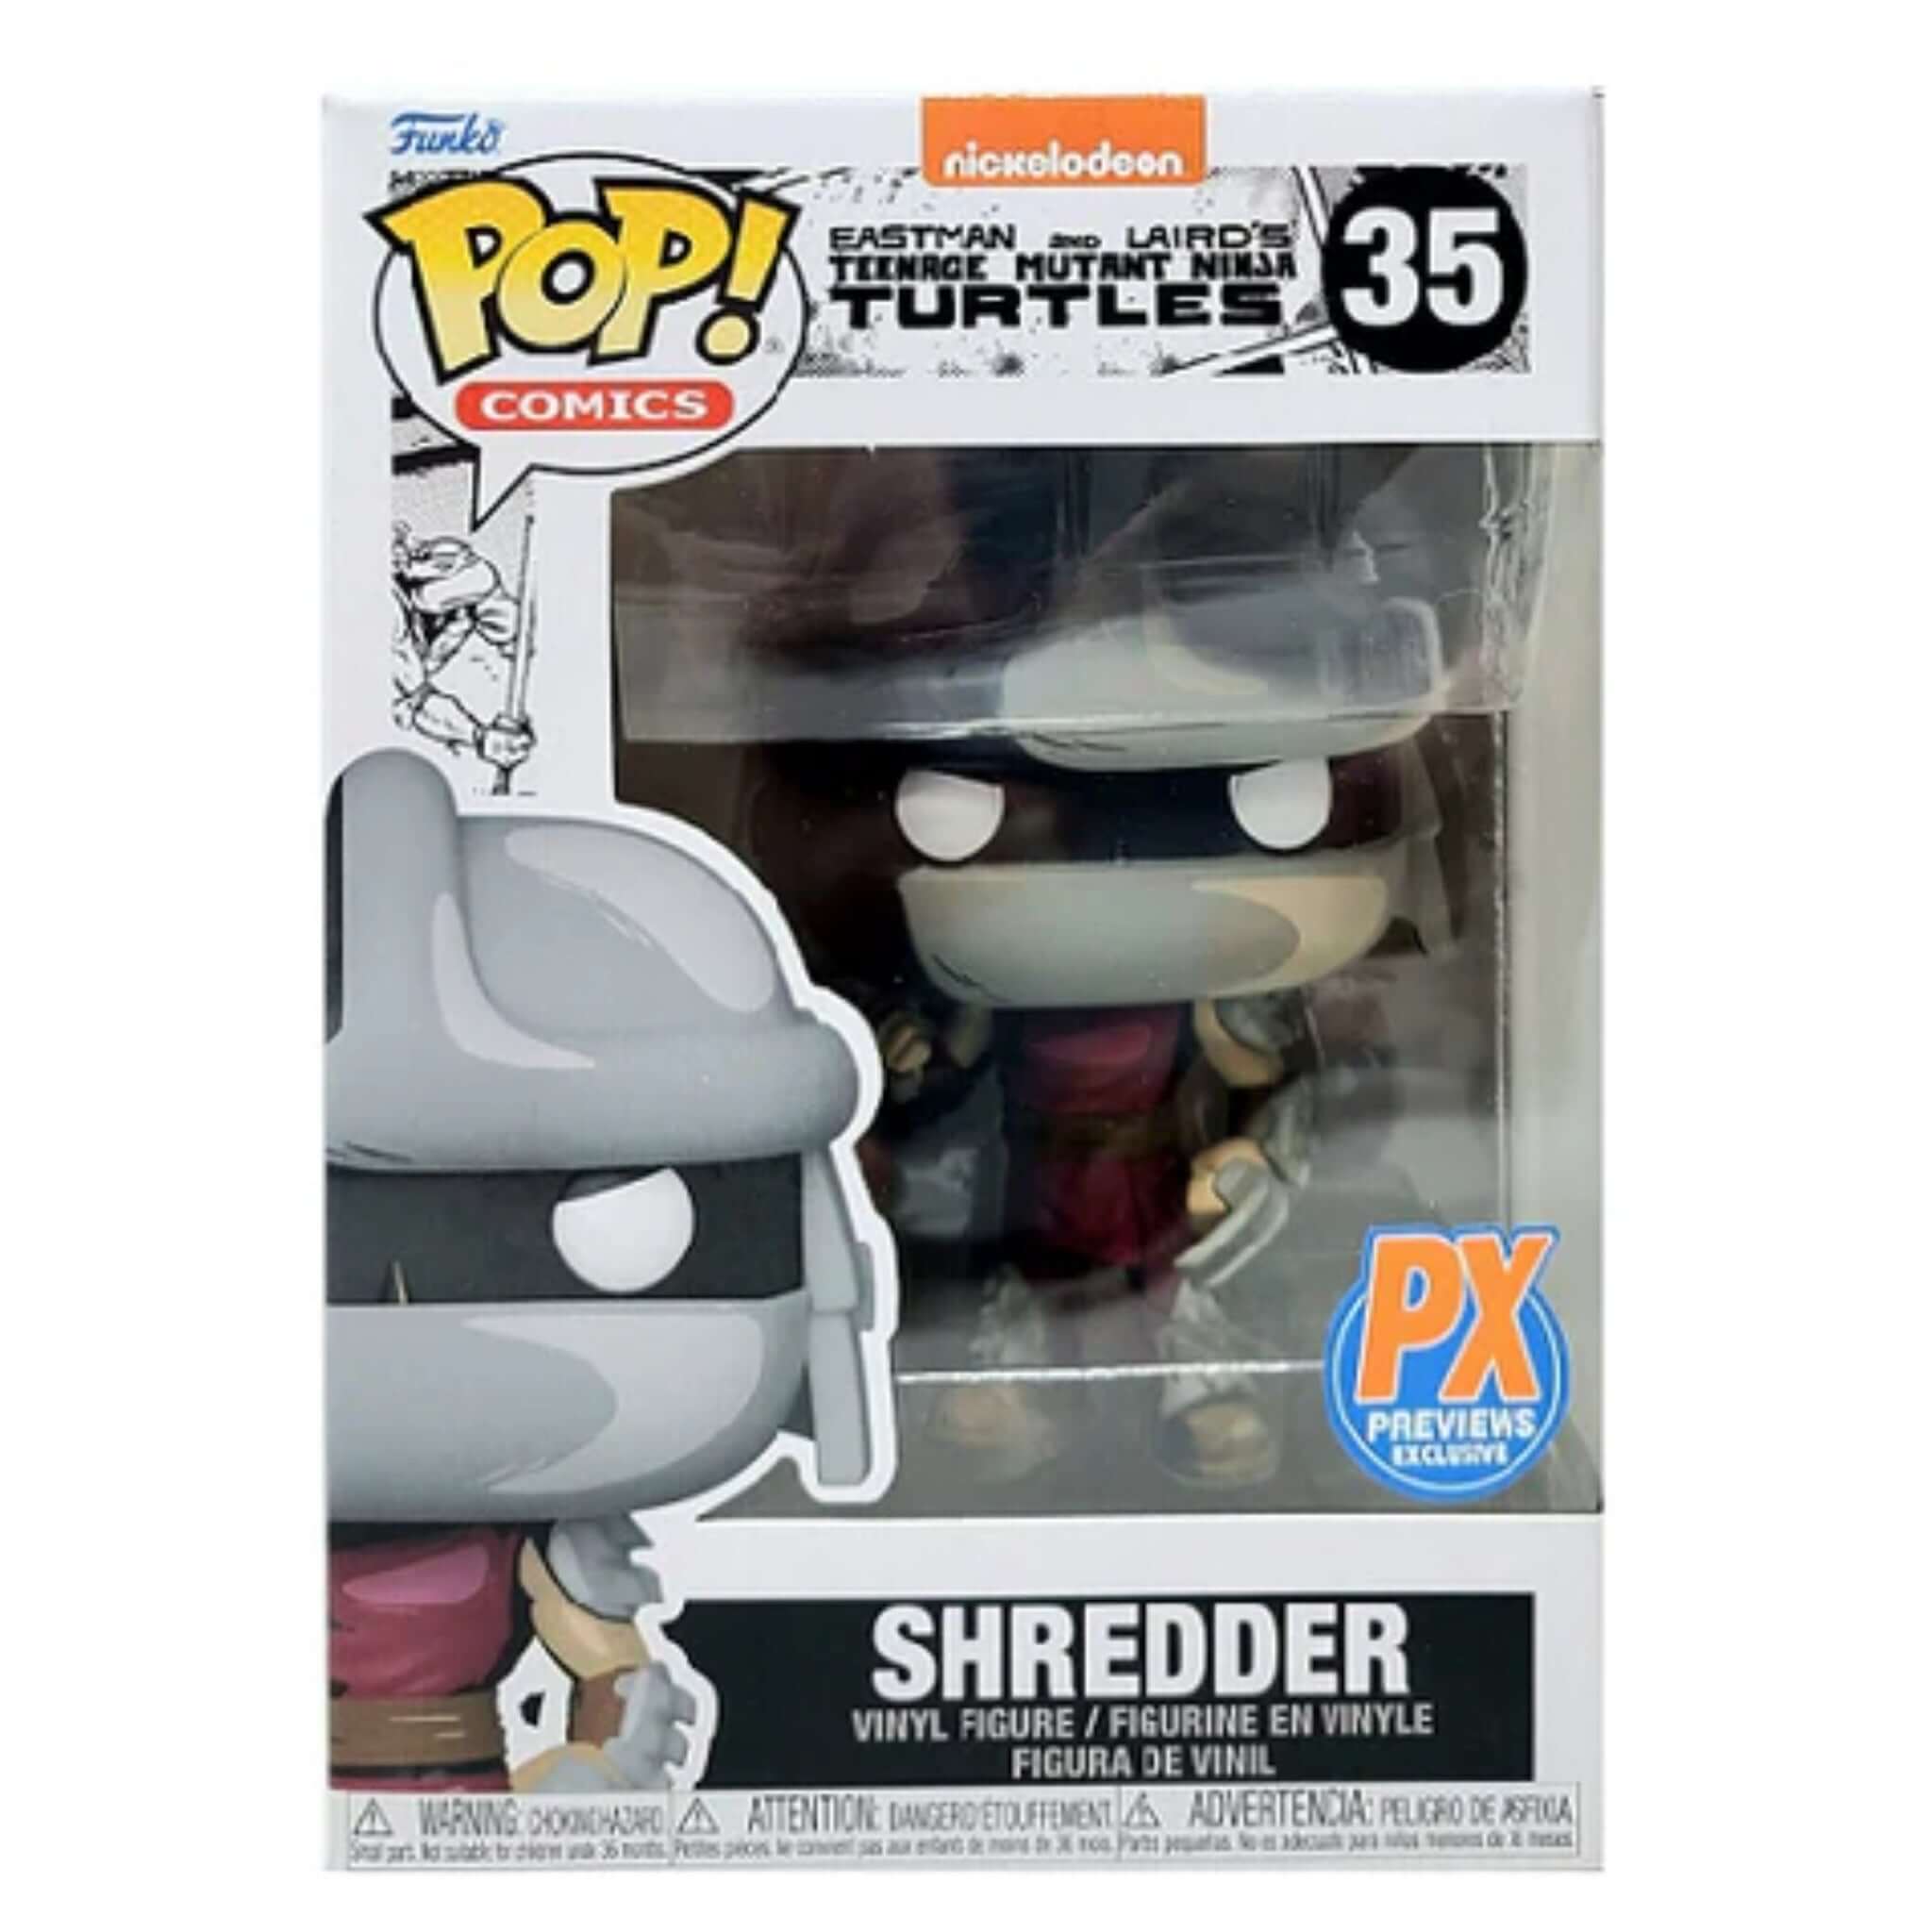 Shredder Funko Pop! PX EXCLUSIVE-Jingle Truck Toys